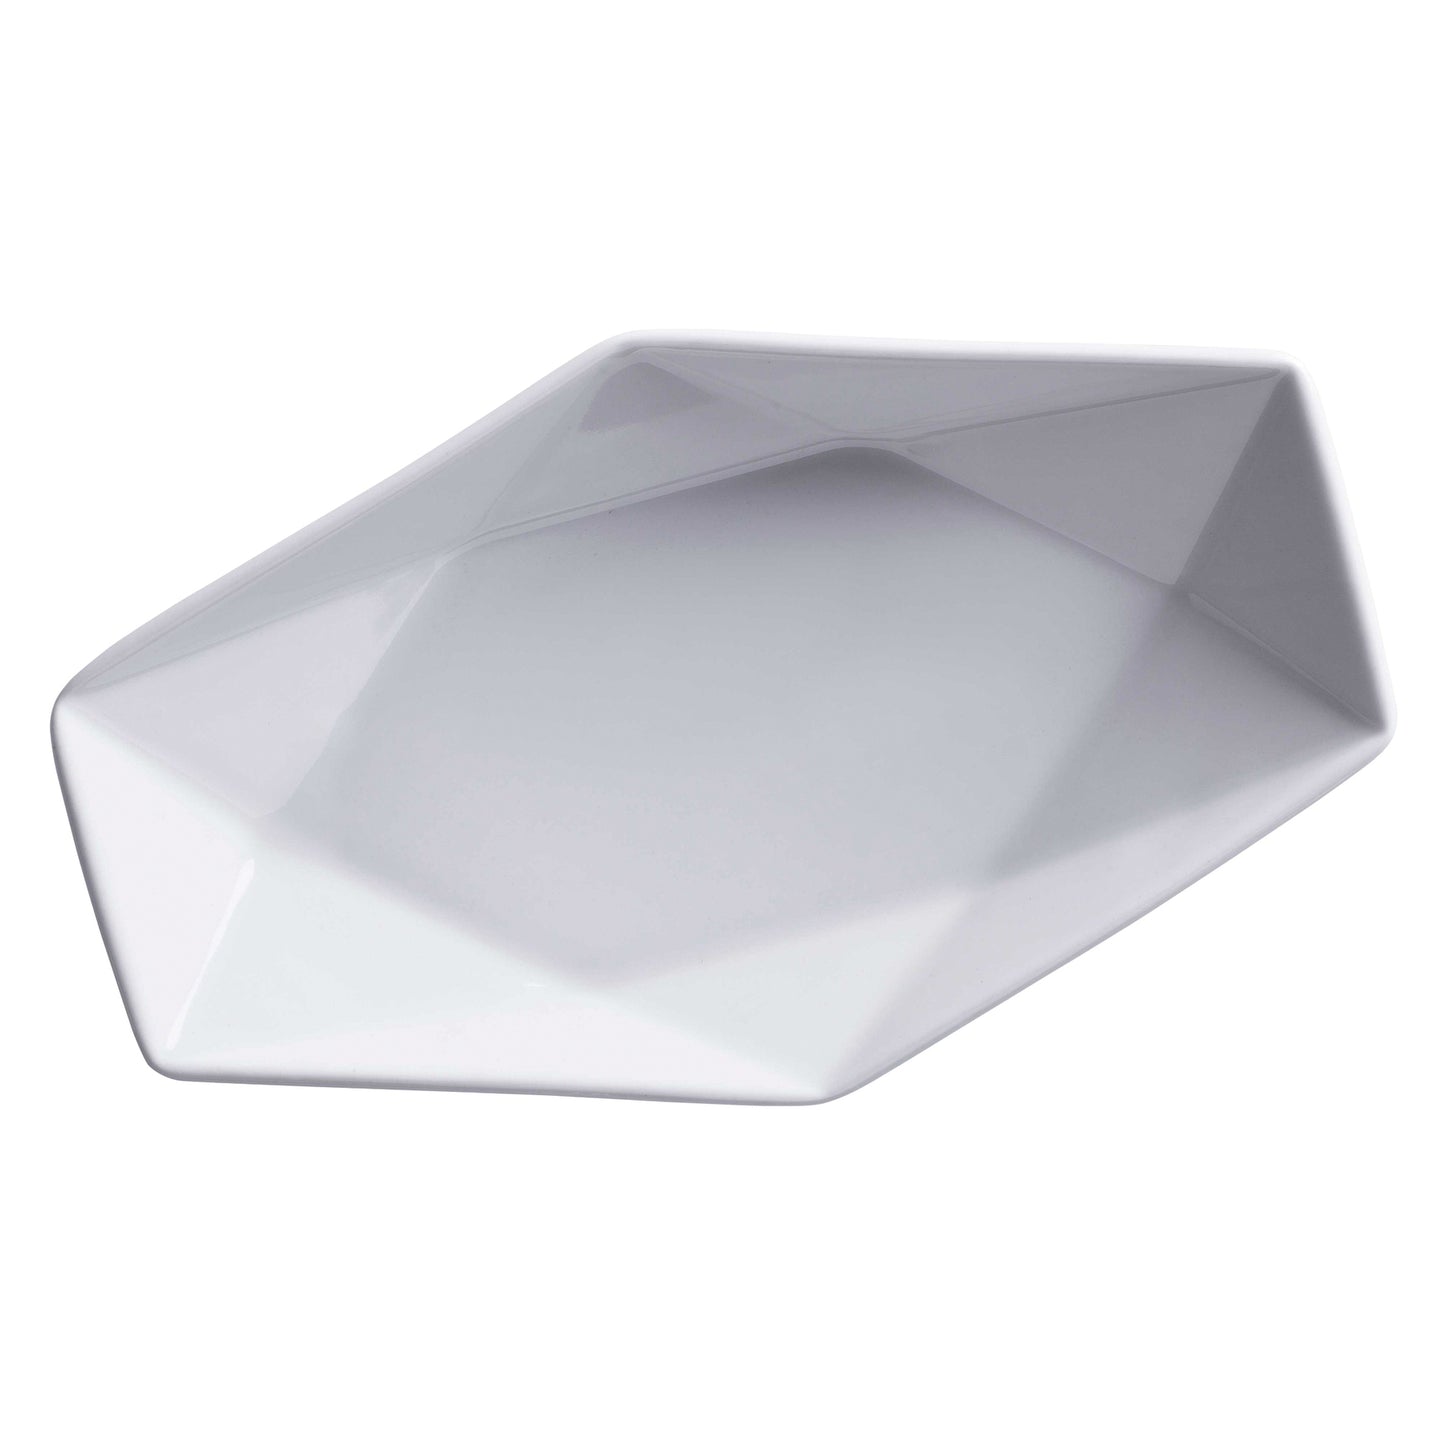 6" x 3 1/4" Bright White Porcelain Hexagonal Plate, Corona Actualite (Stocked) (12 Pack)